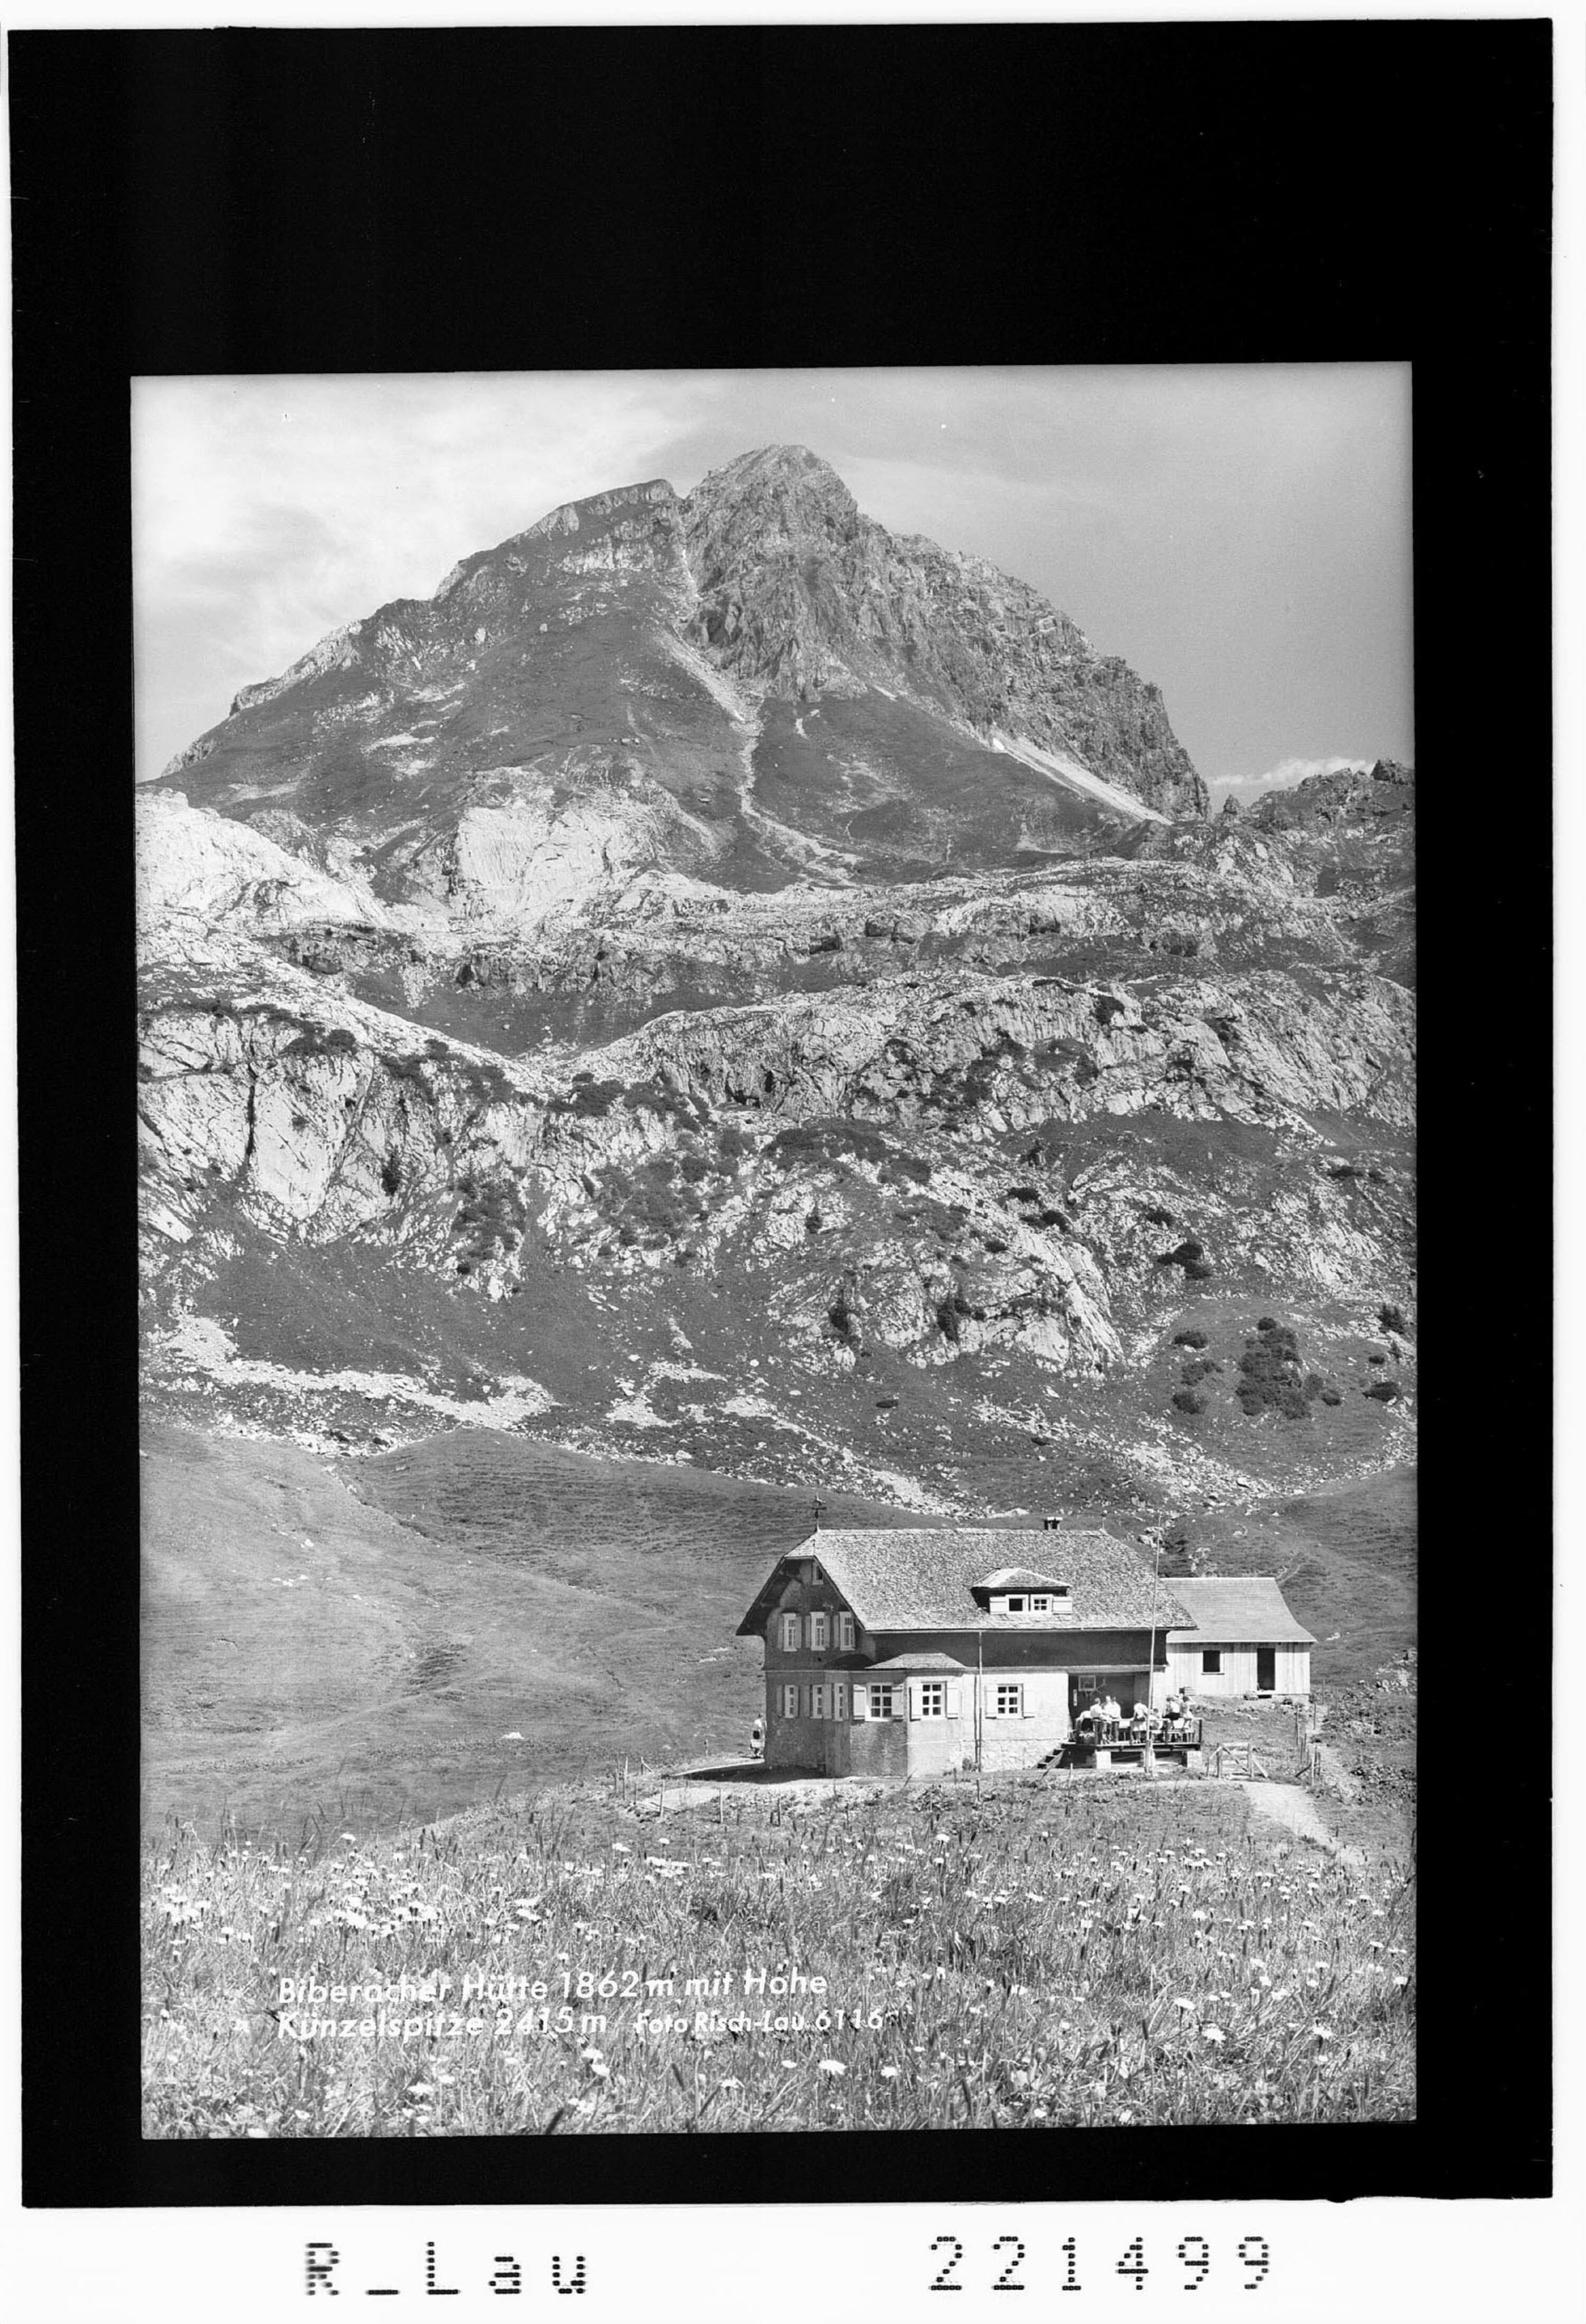 Biberacher Hütte 1862 mit Hohe Künzelspitze 2415 m></div>


    <hr>
    <div class=